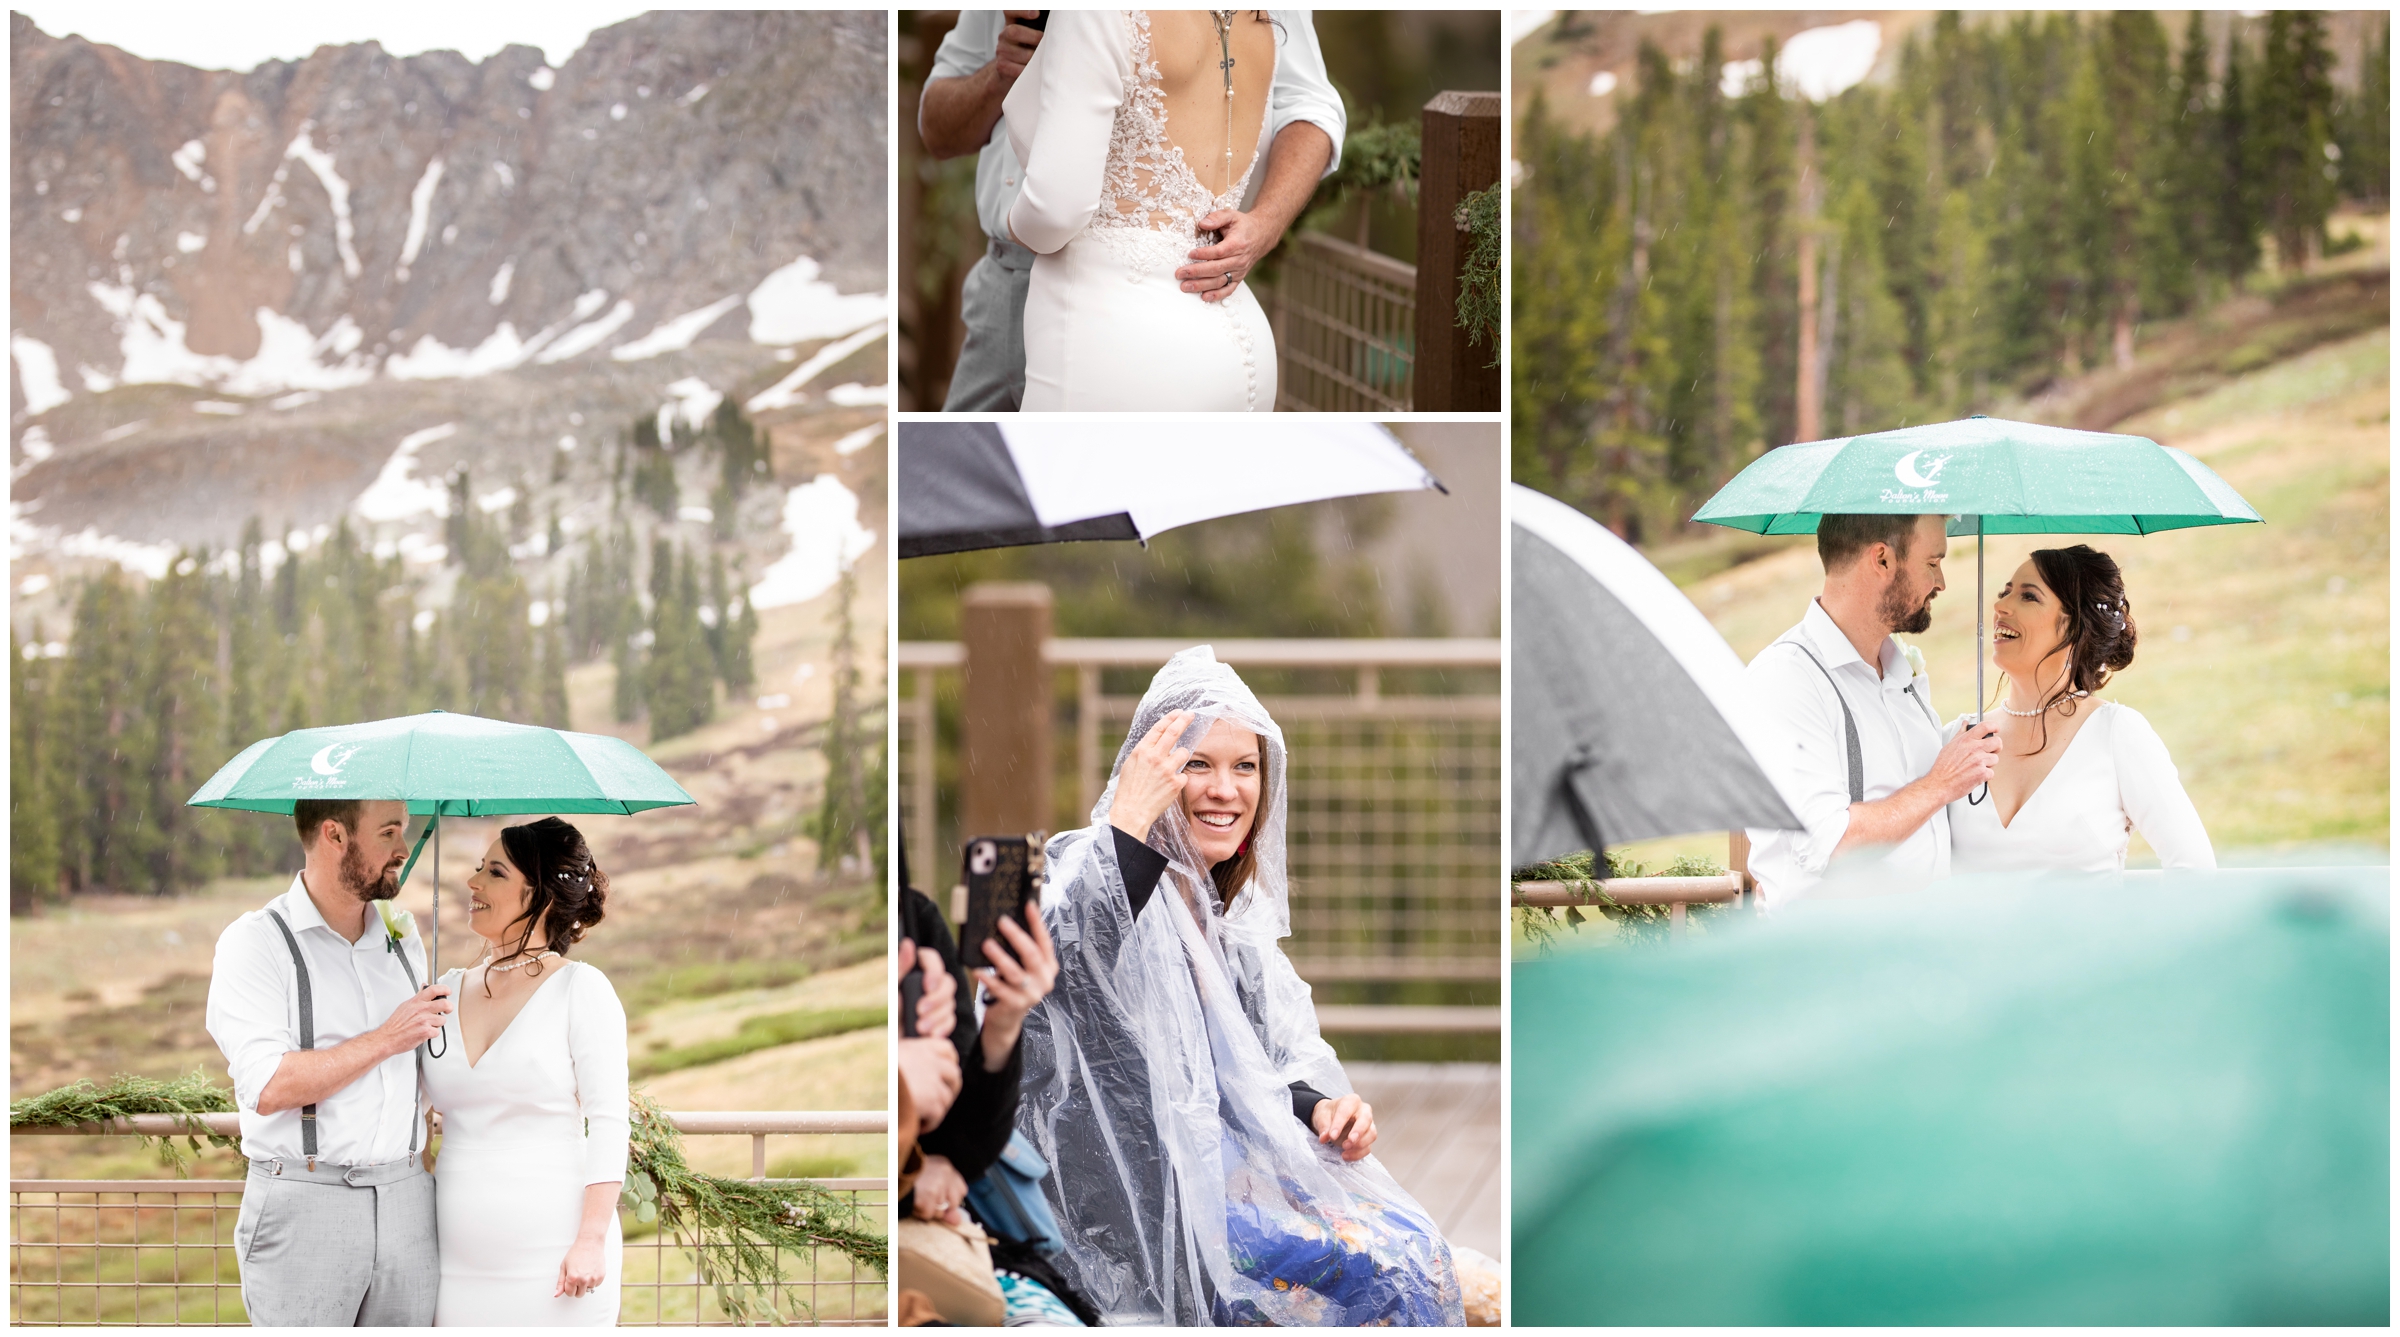 rainy wedding ceremony at Arapahoe Basin in the Colorado mountains 